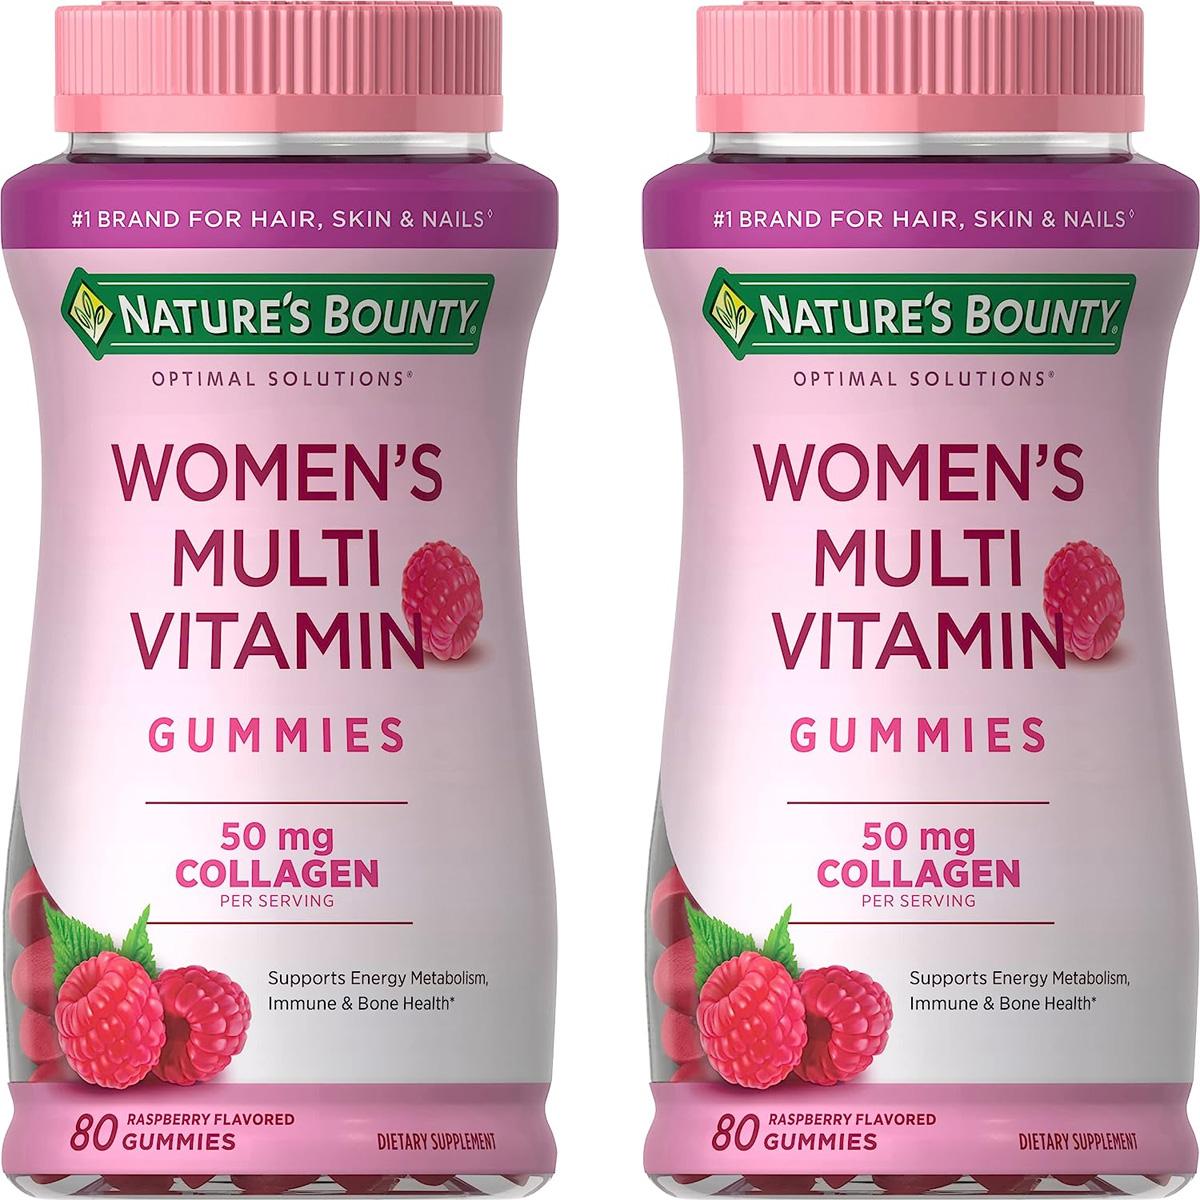 Natures Bounty Optimal Solutions Womens Multivitamin 2 Bottles for $7.99